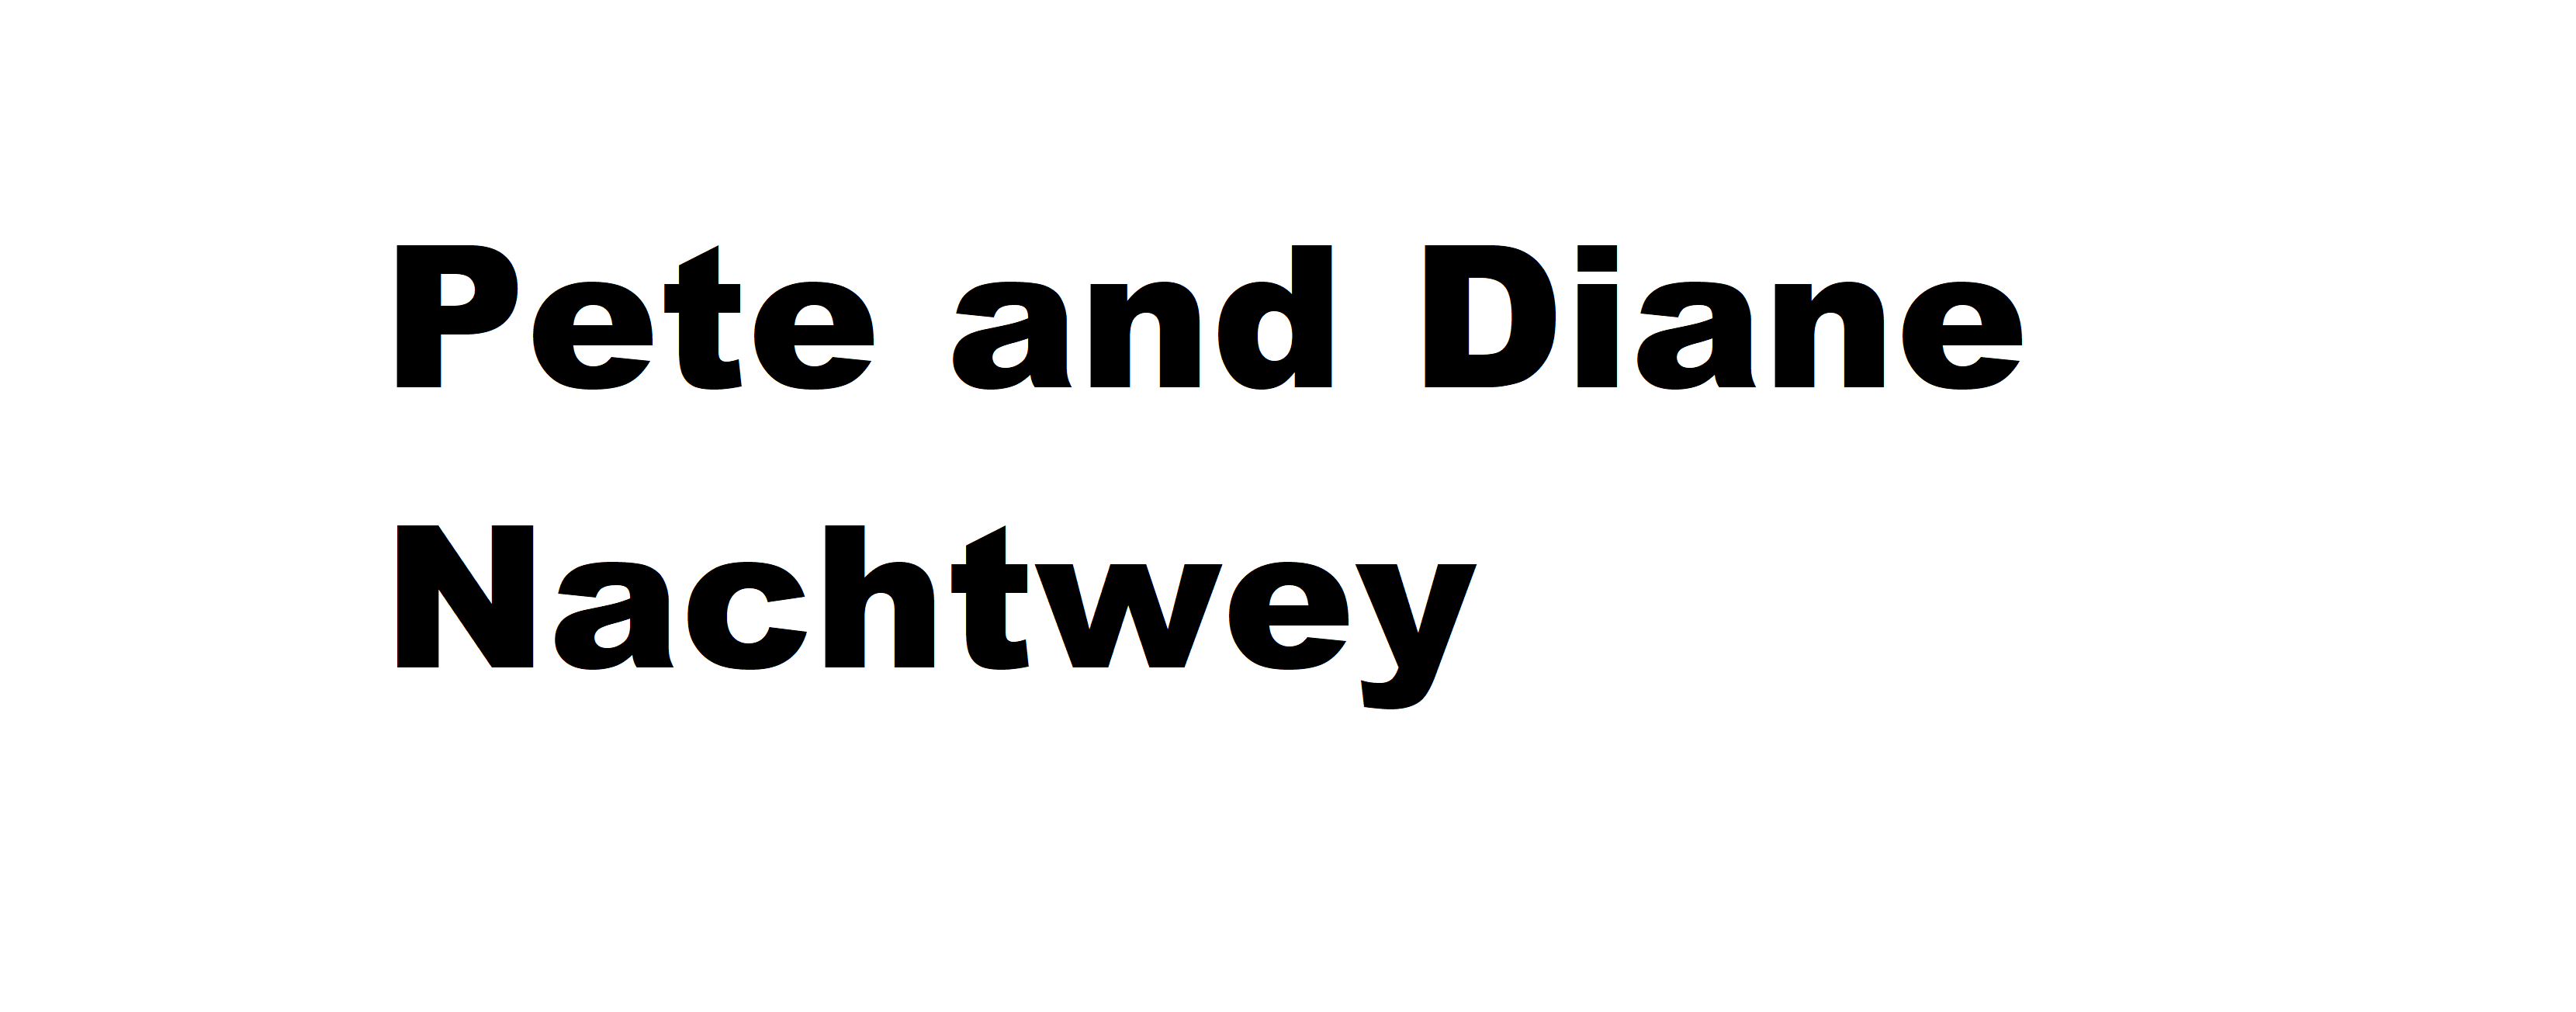 Pete and Diane Nachtwey